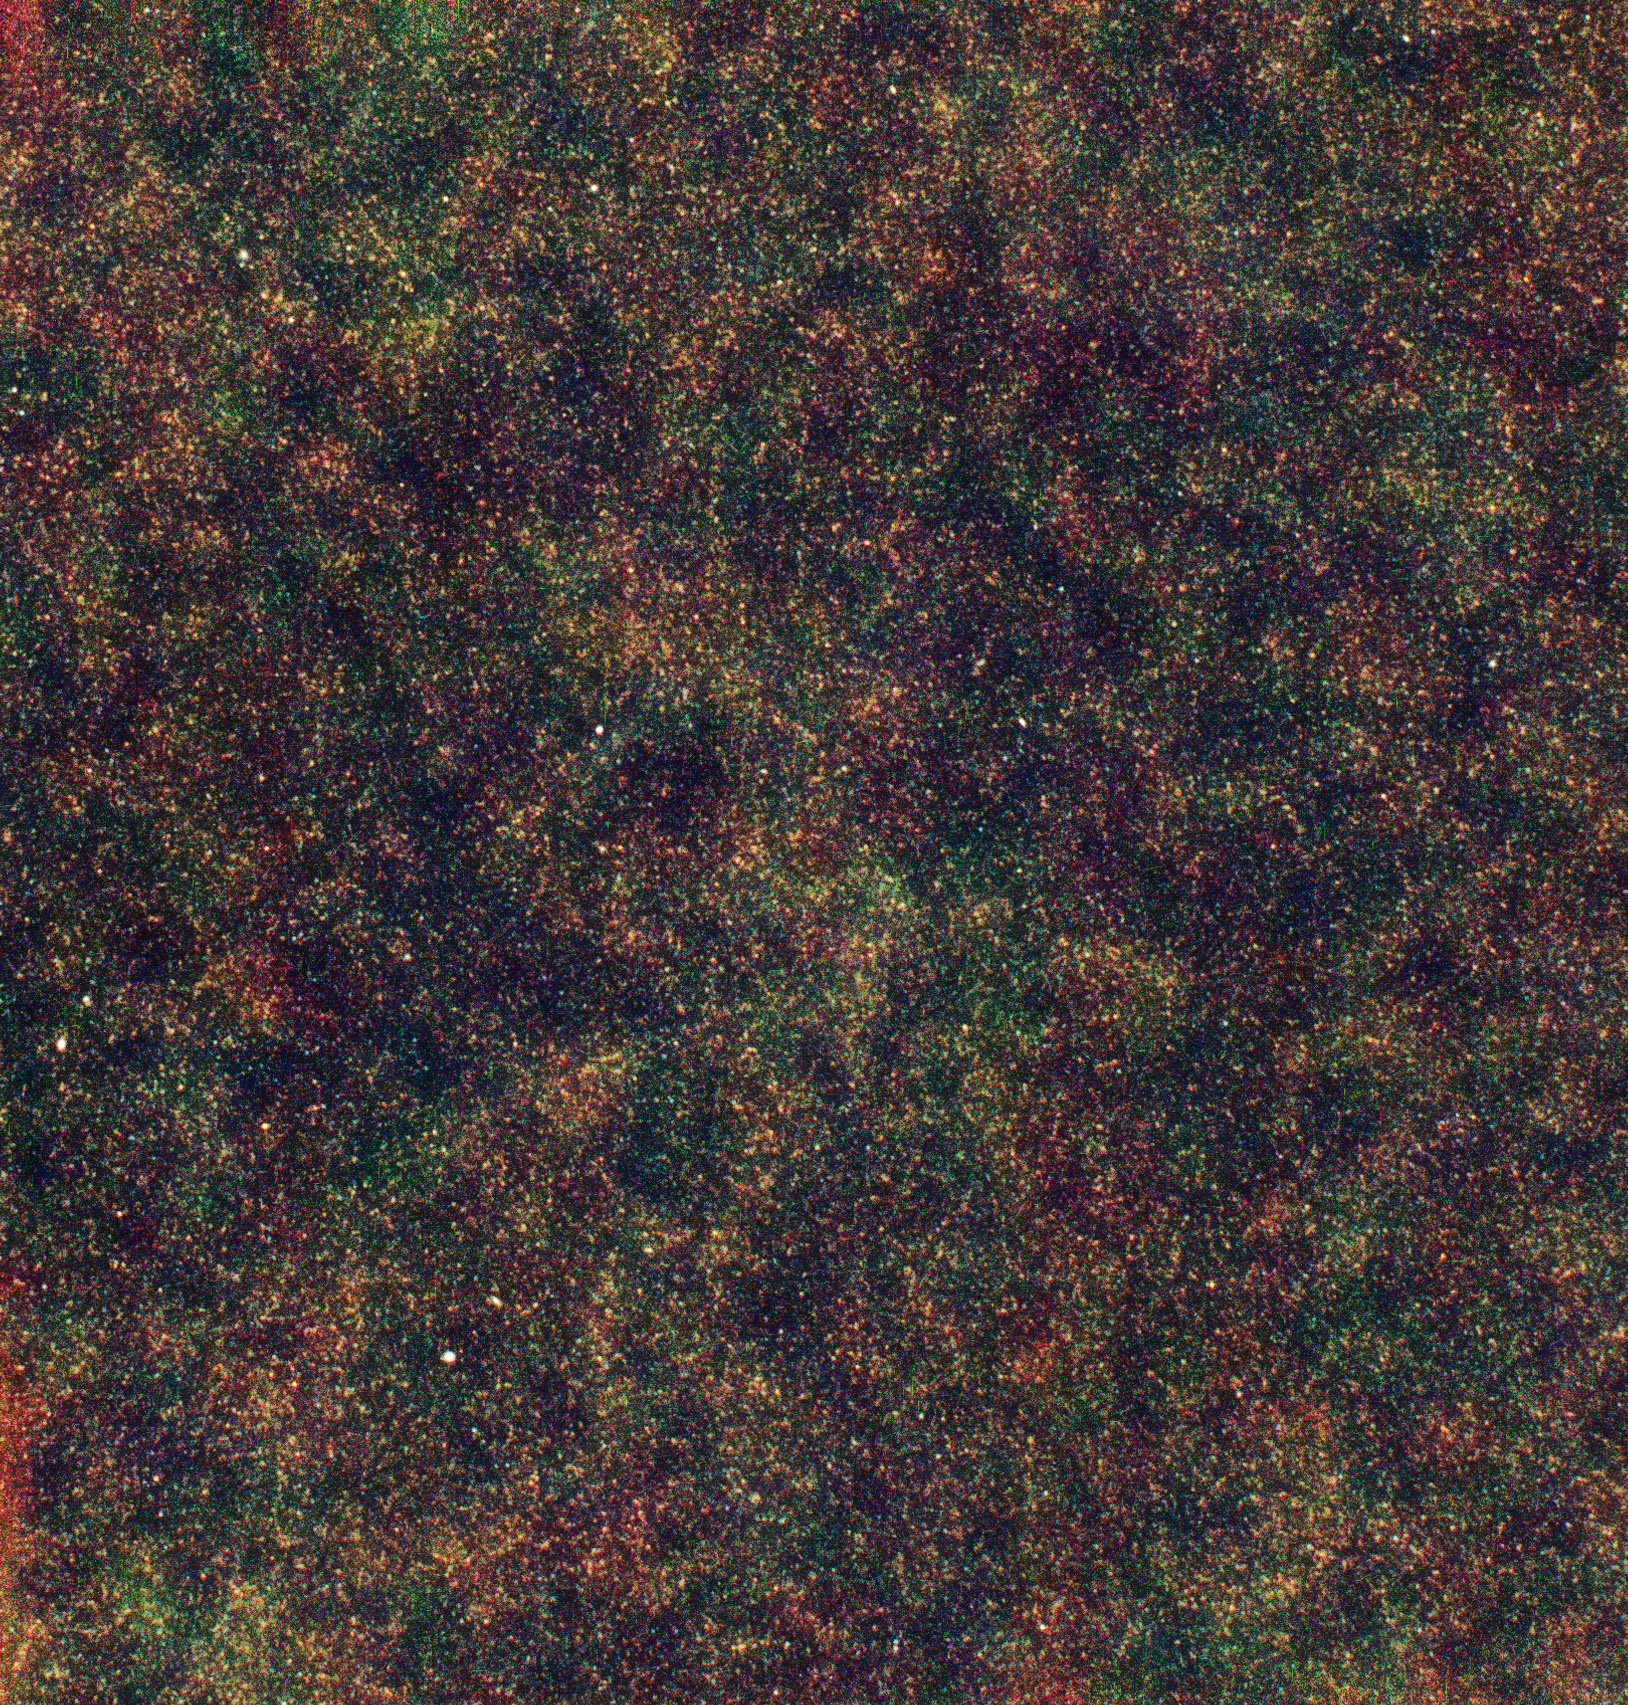 http://earth-chronicles.ru/Publications_7/68/star-forming_galaxies_like_grains_of_sand_1big.jpg